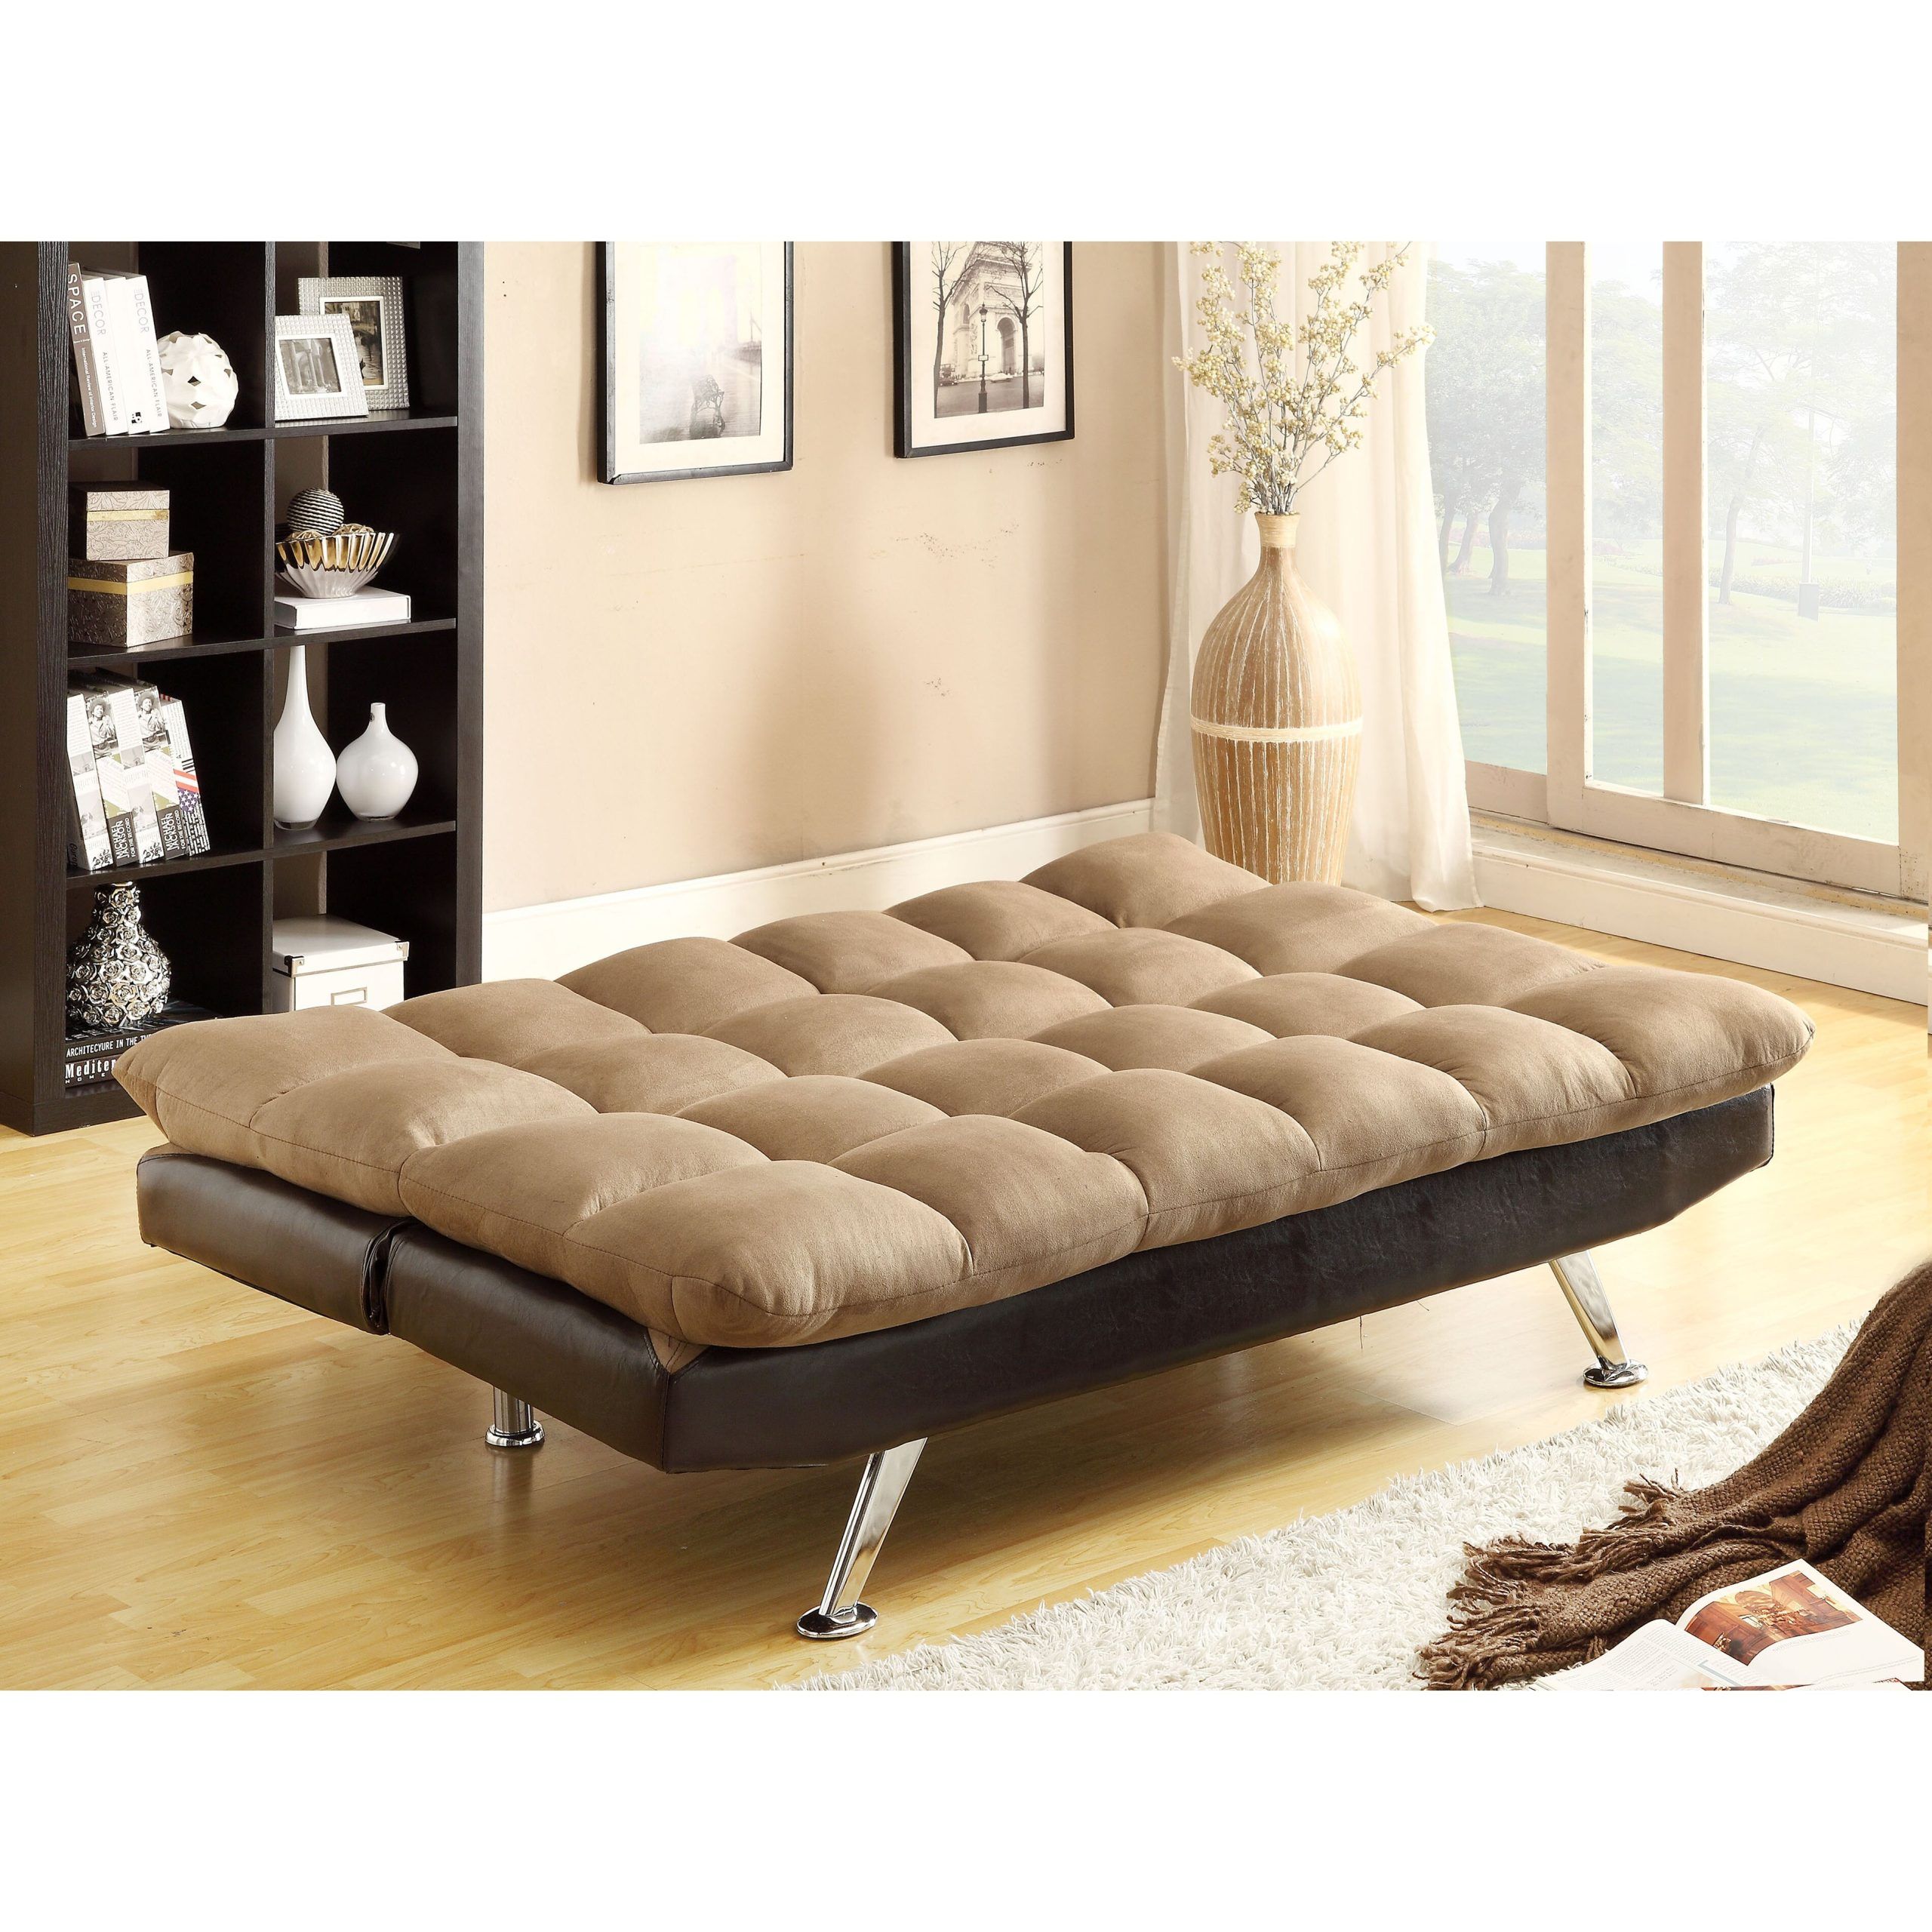 Wildon Home ® Adjustable Sleeper Sofa Futon And Mattress & Reviews Pertaining To Adjustable Backrest Futon Sofa Beds (View 10 of 20)